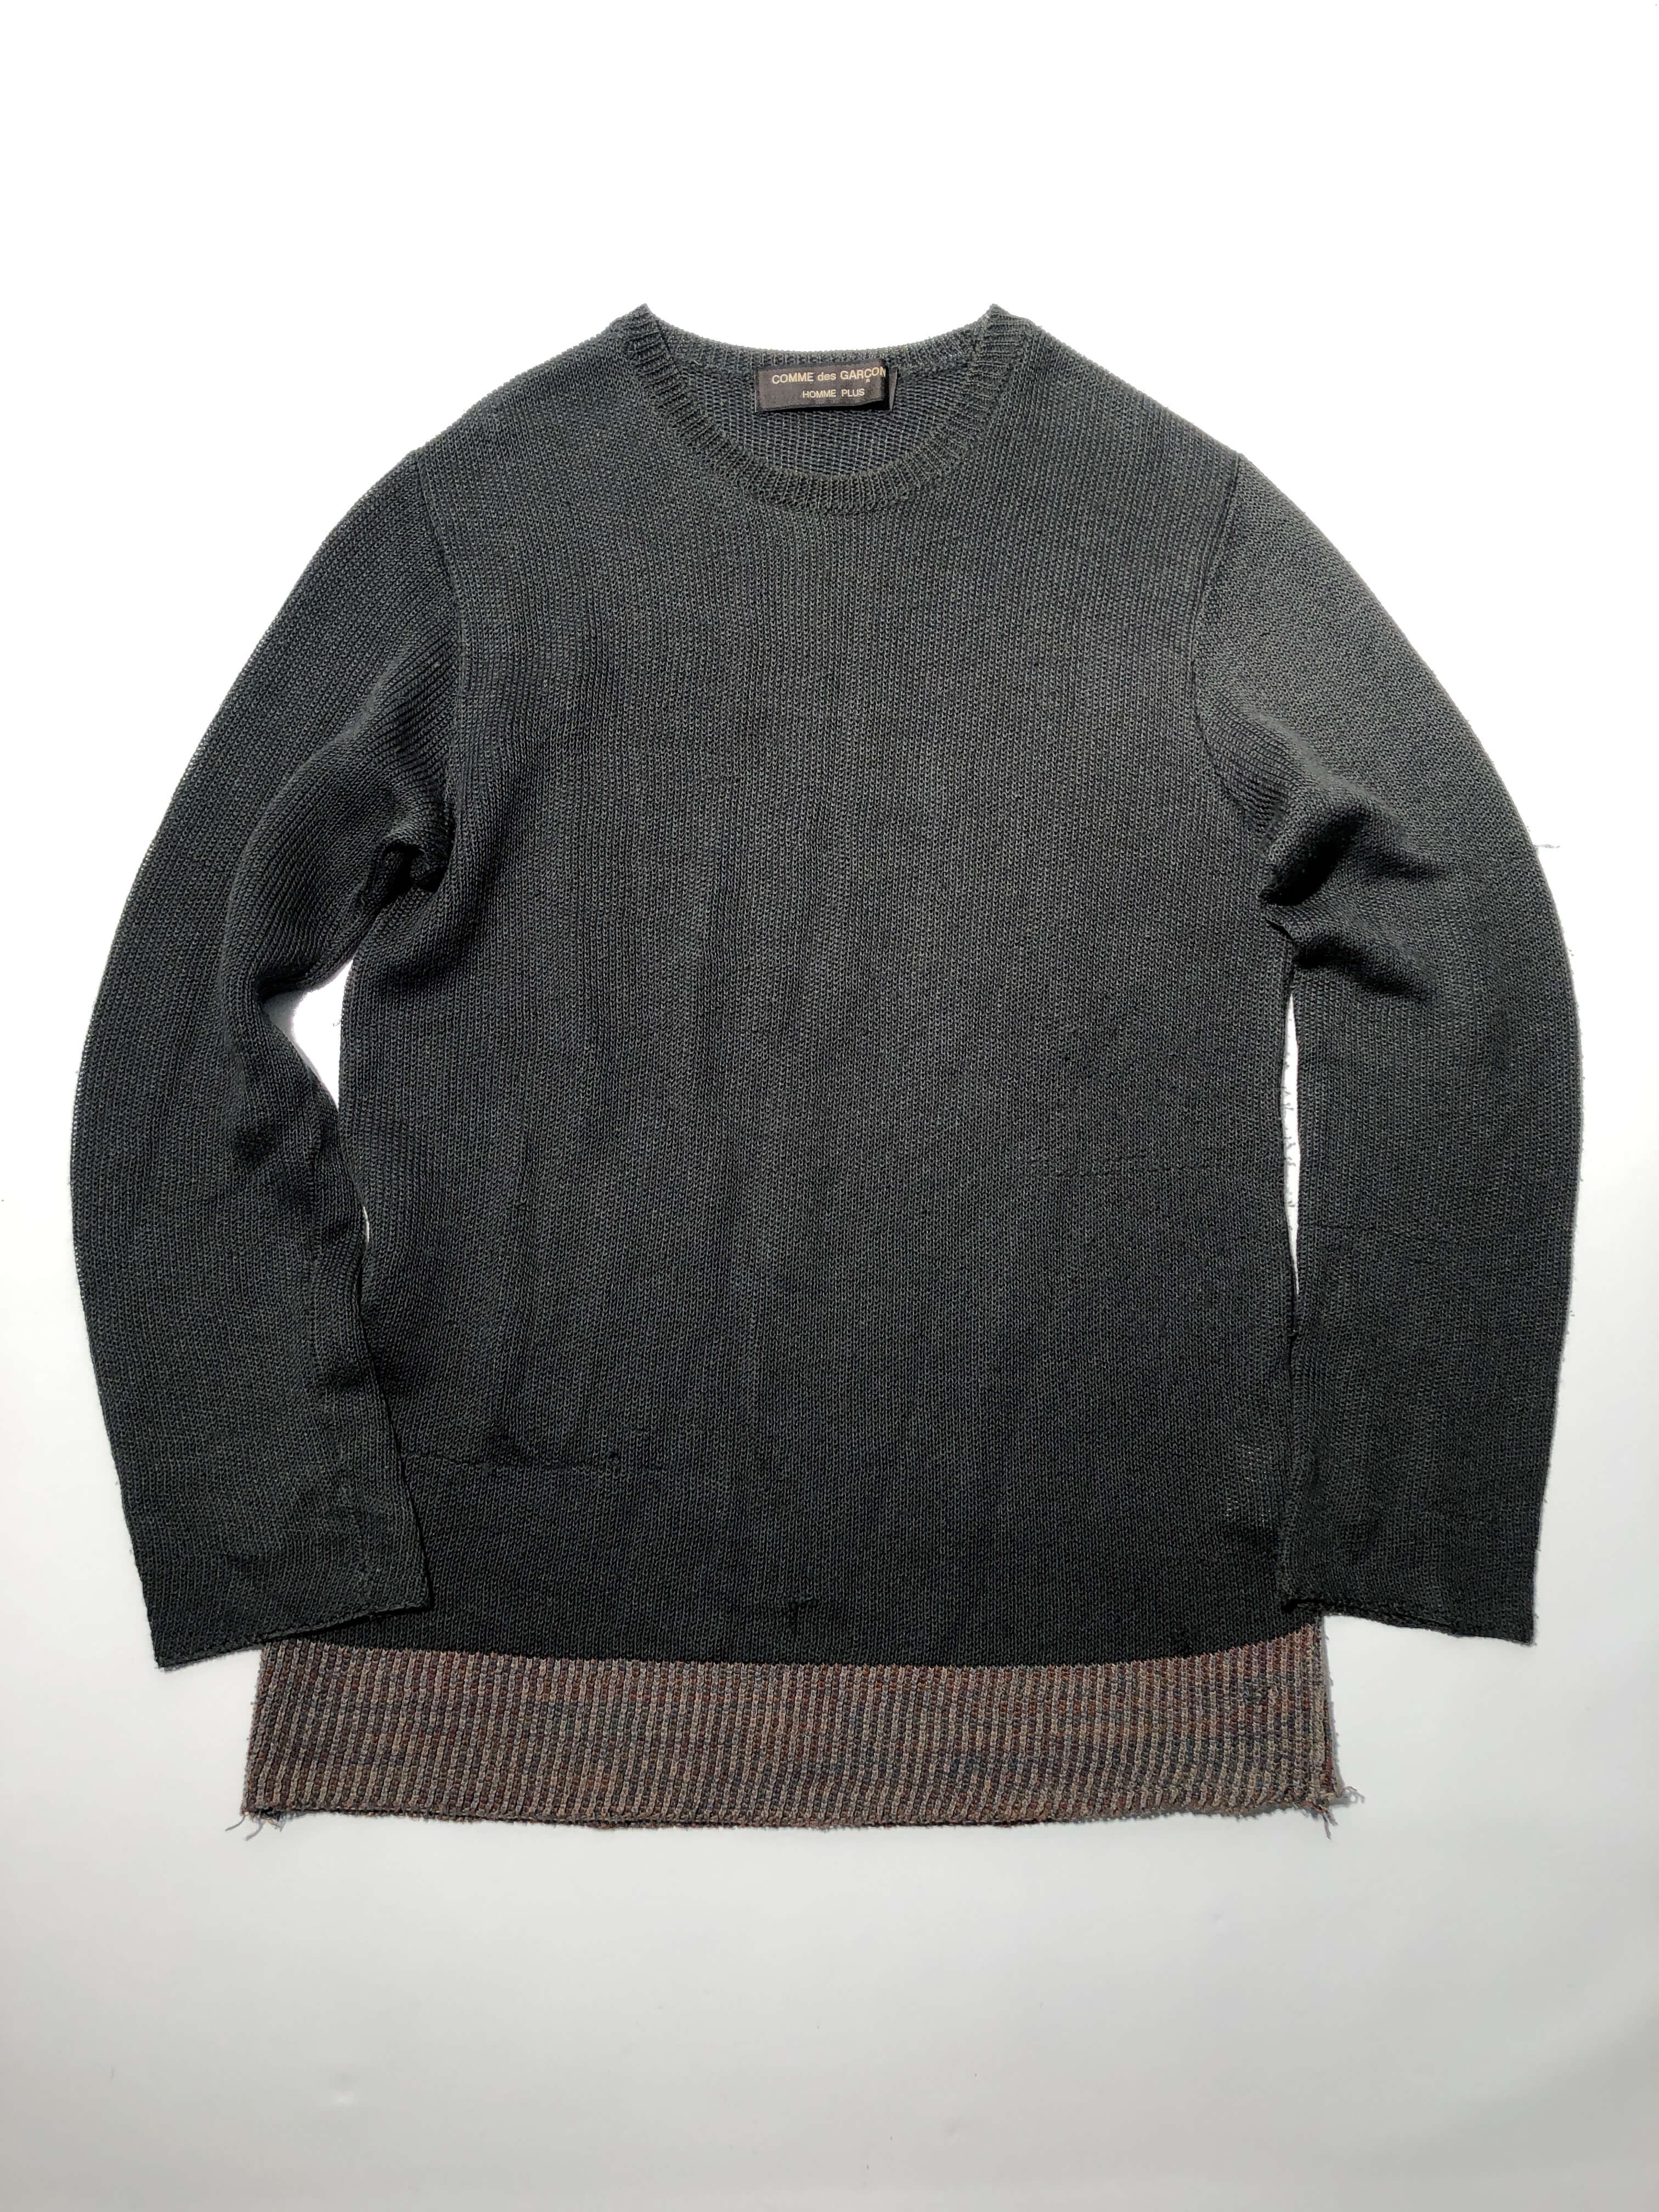 Comme Des Garcons HOMME PLUS 94ss layered knit